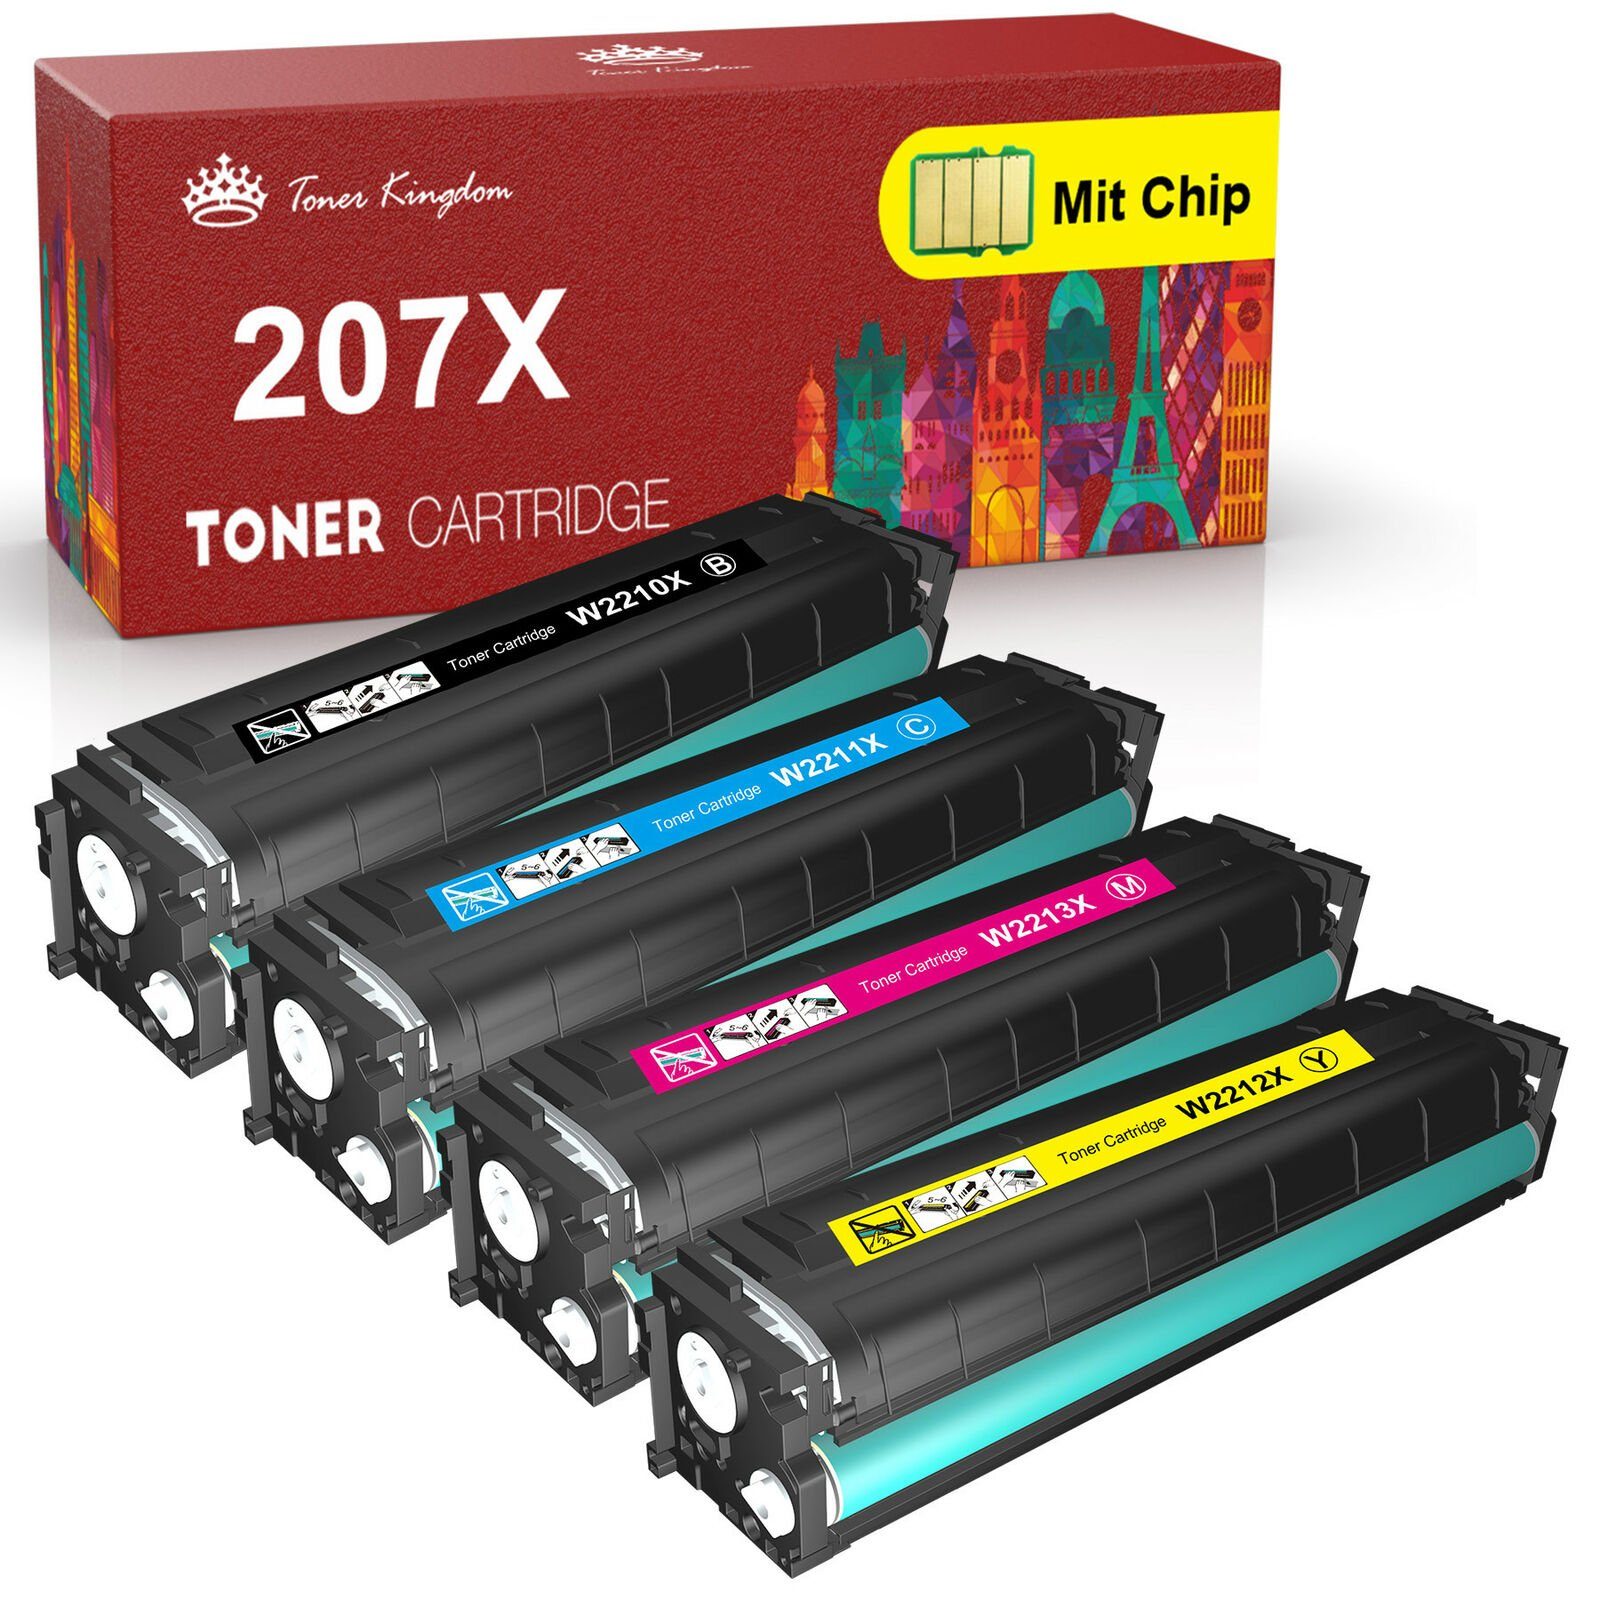 Toner Kingdom Tonerpatrone Kompatibel Mit Pro 207X HP für Chip M282nw M283fdw